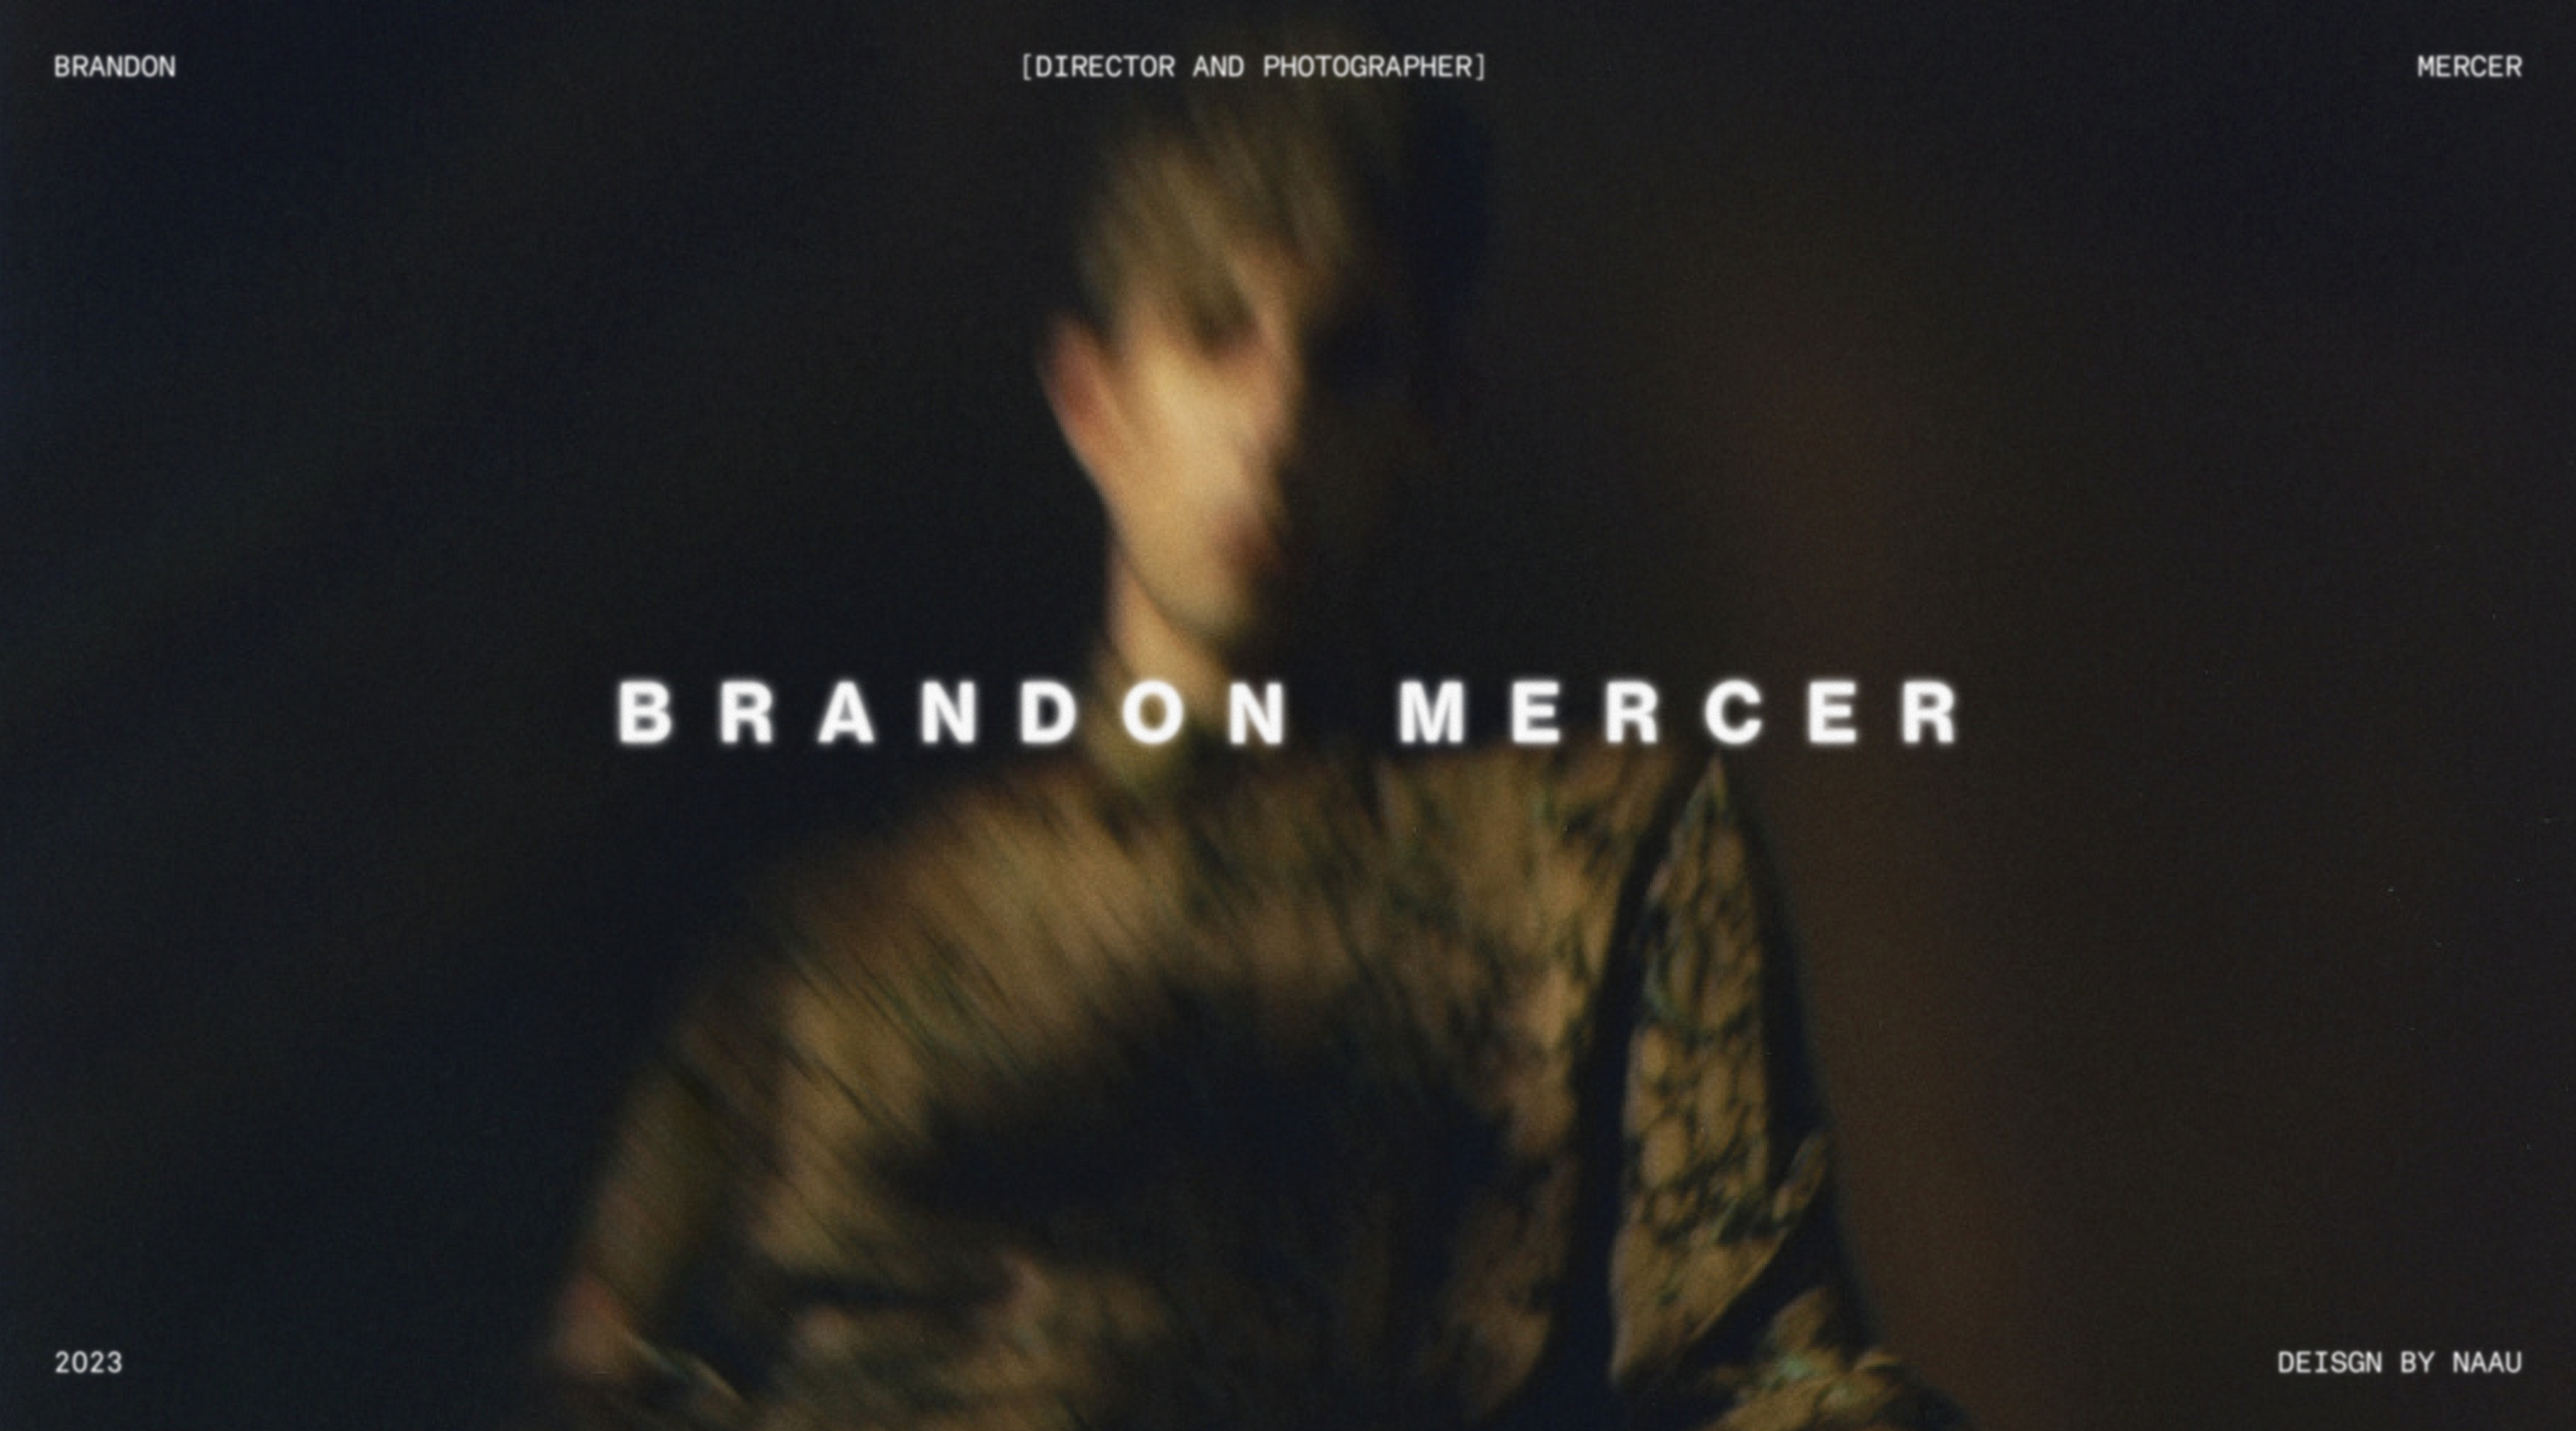 Brandon Mercer — Изображение №1 — Интерфейсы, Брендинг на Dprofile